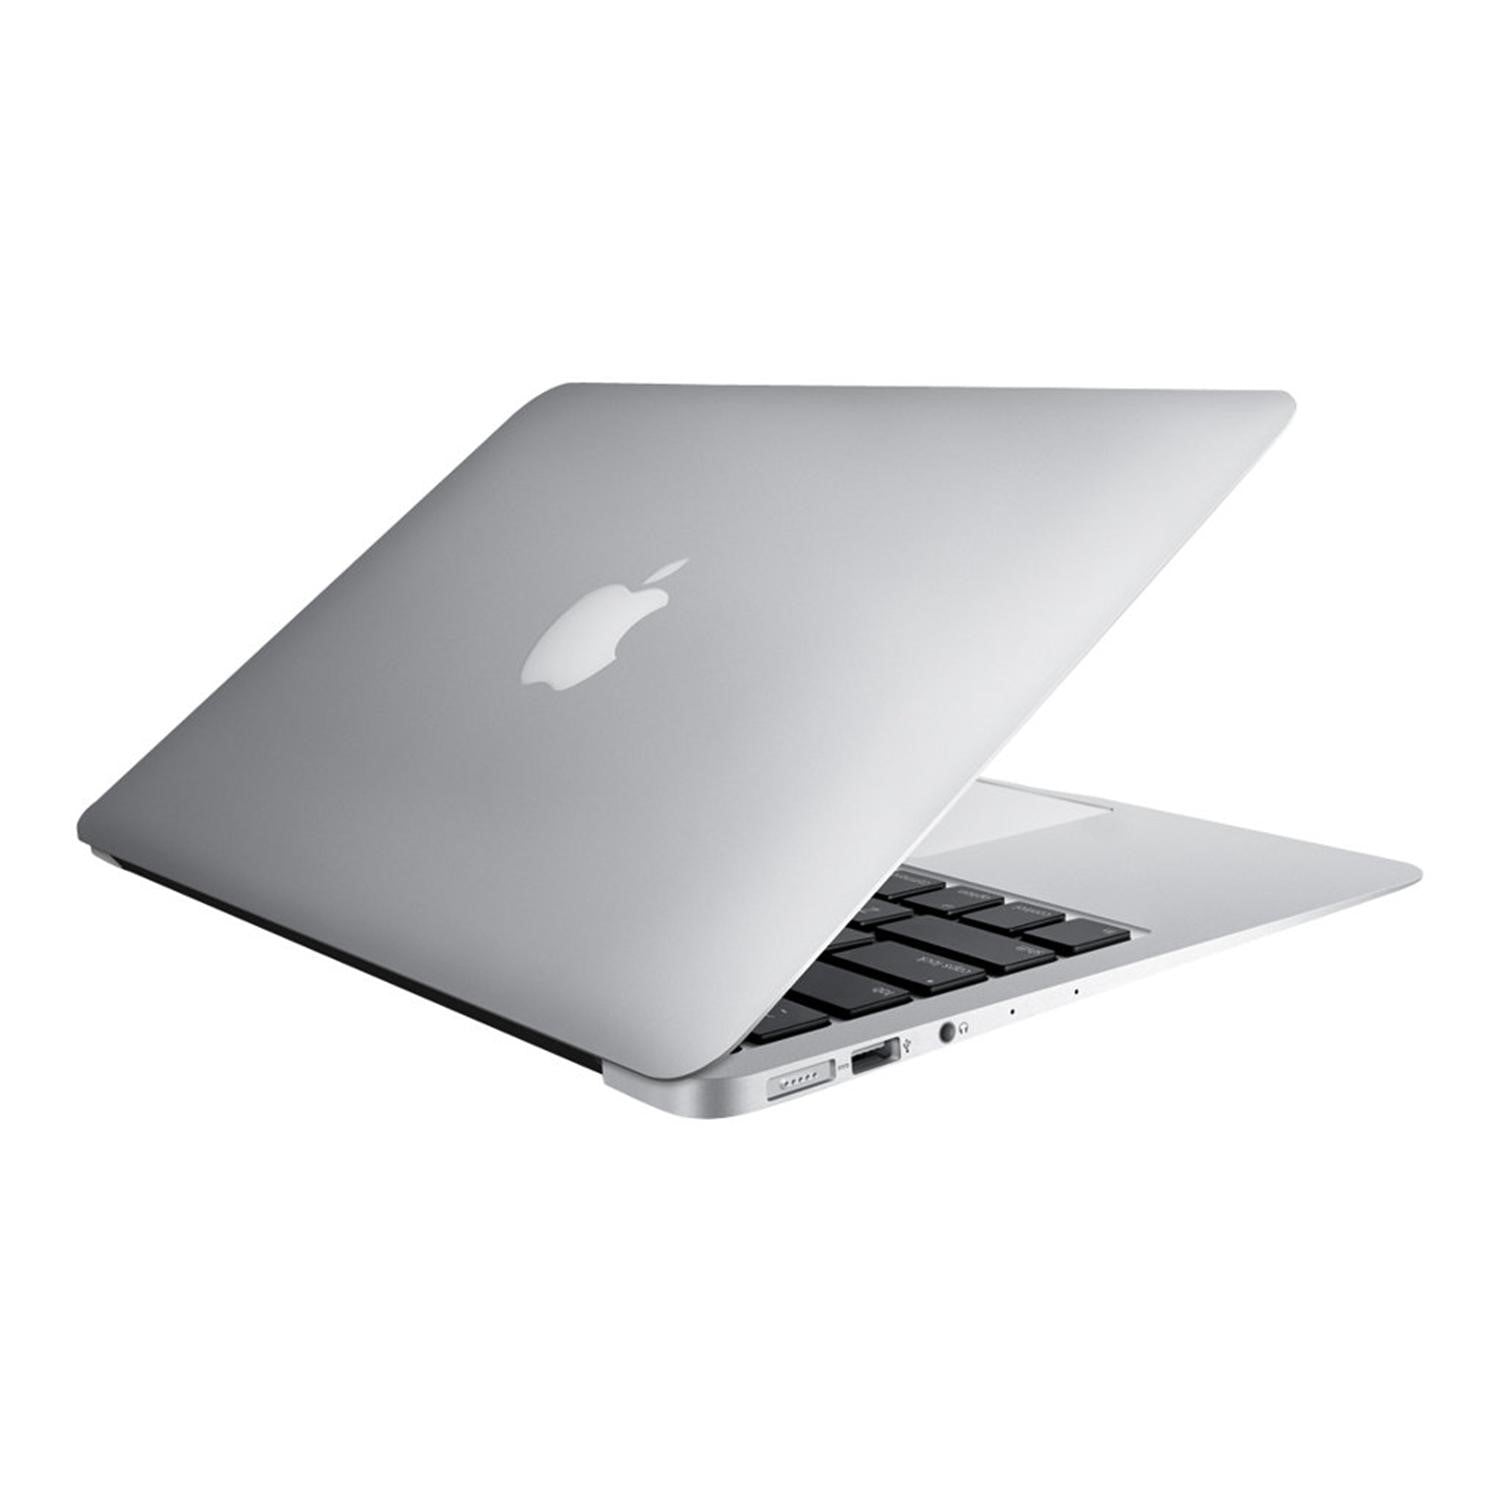 Apple MacBook Air 13.3'' MJVG2LL/A (2015) Laptop, Intel Core i5, 8GB RAM, 256GB SSD, Silver - Good